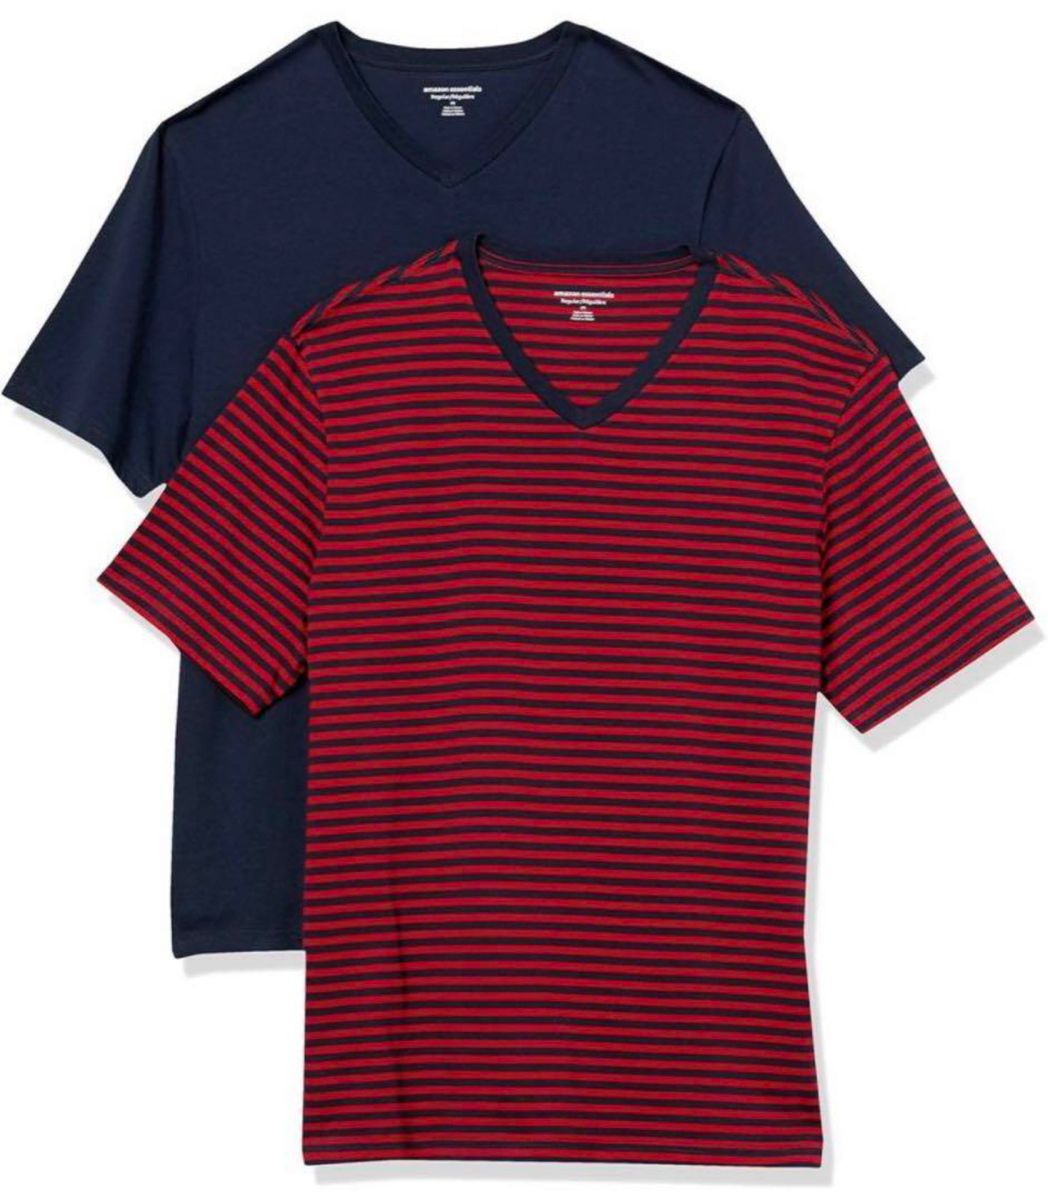 Tシャツ Vネック 2枚組 レギュラーフィット 半袖 メンズ カジュアル 半袖Tシャツ ボーダー